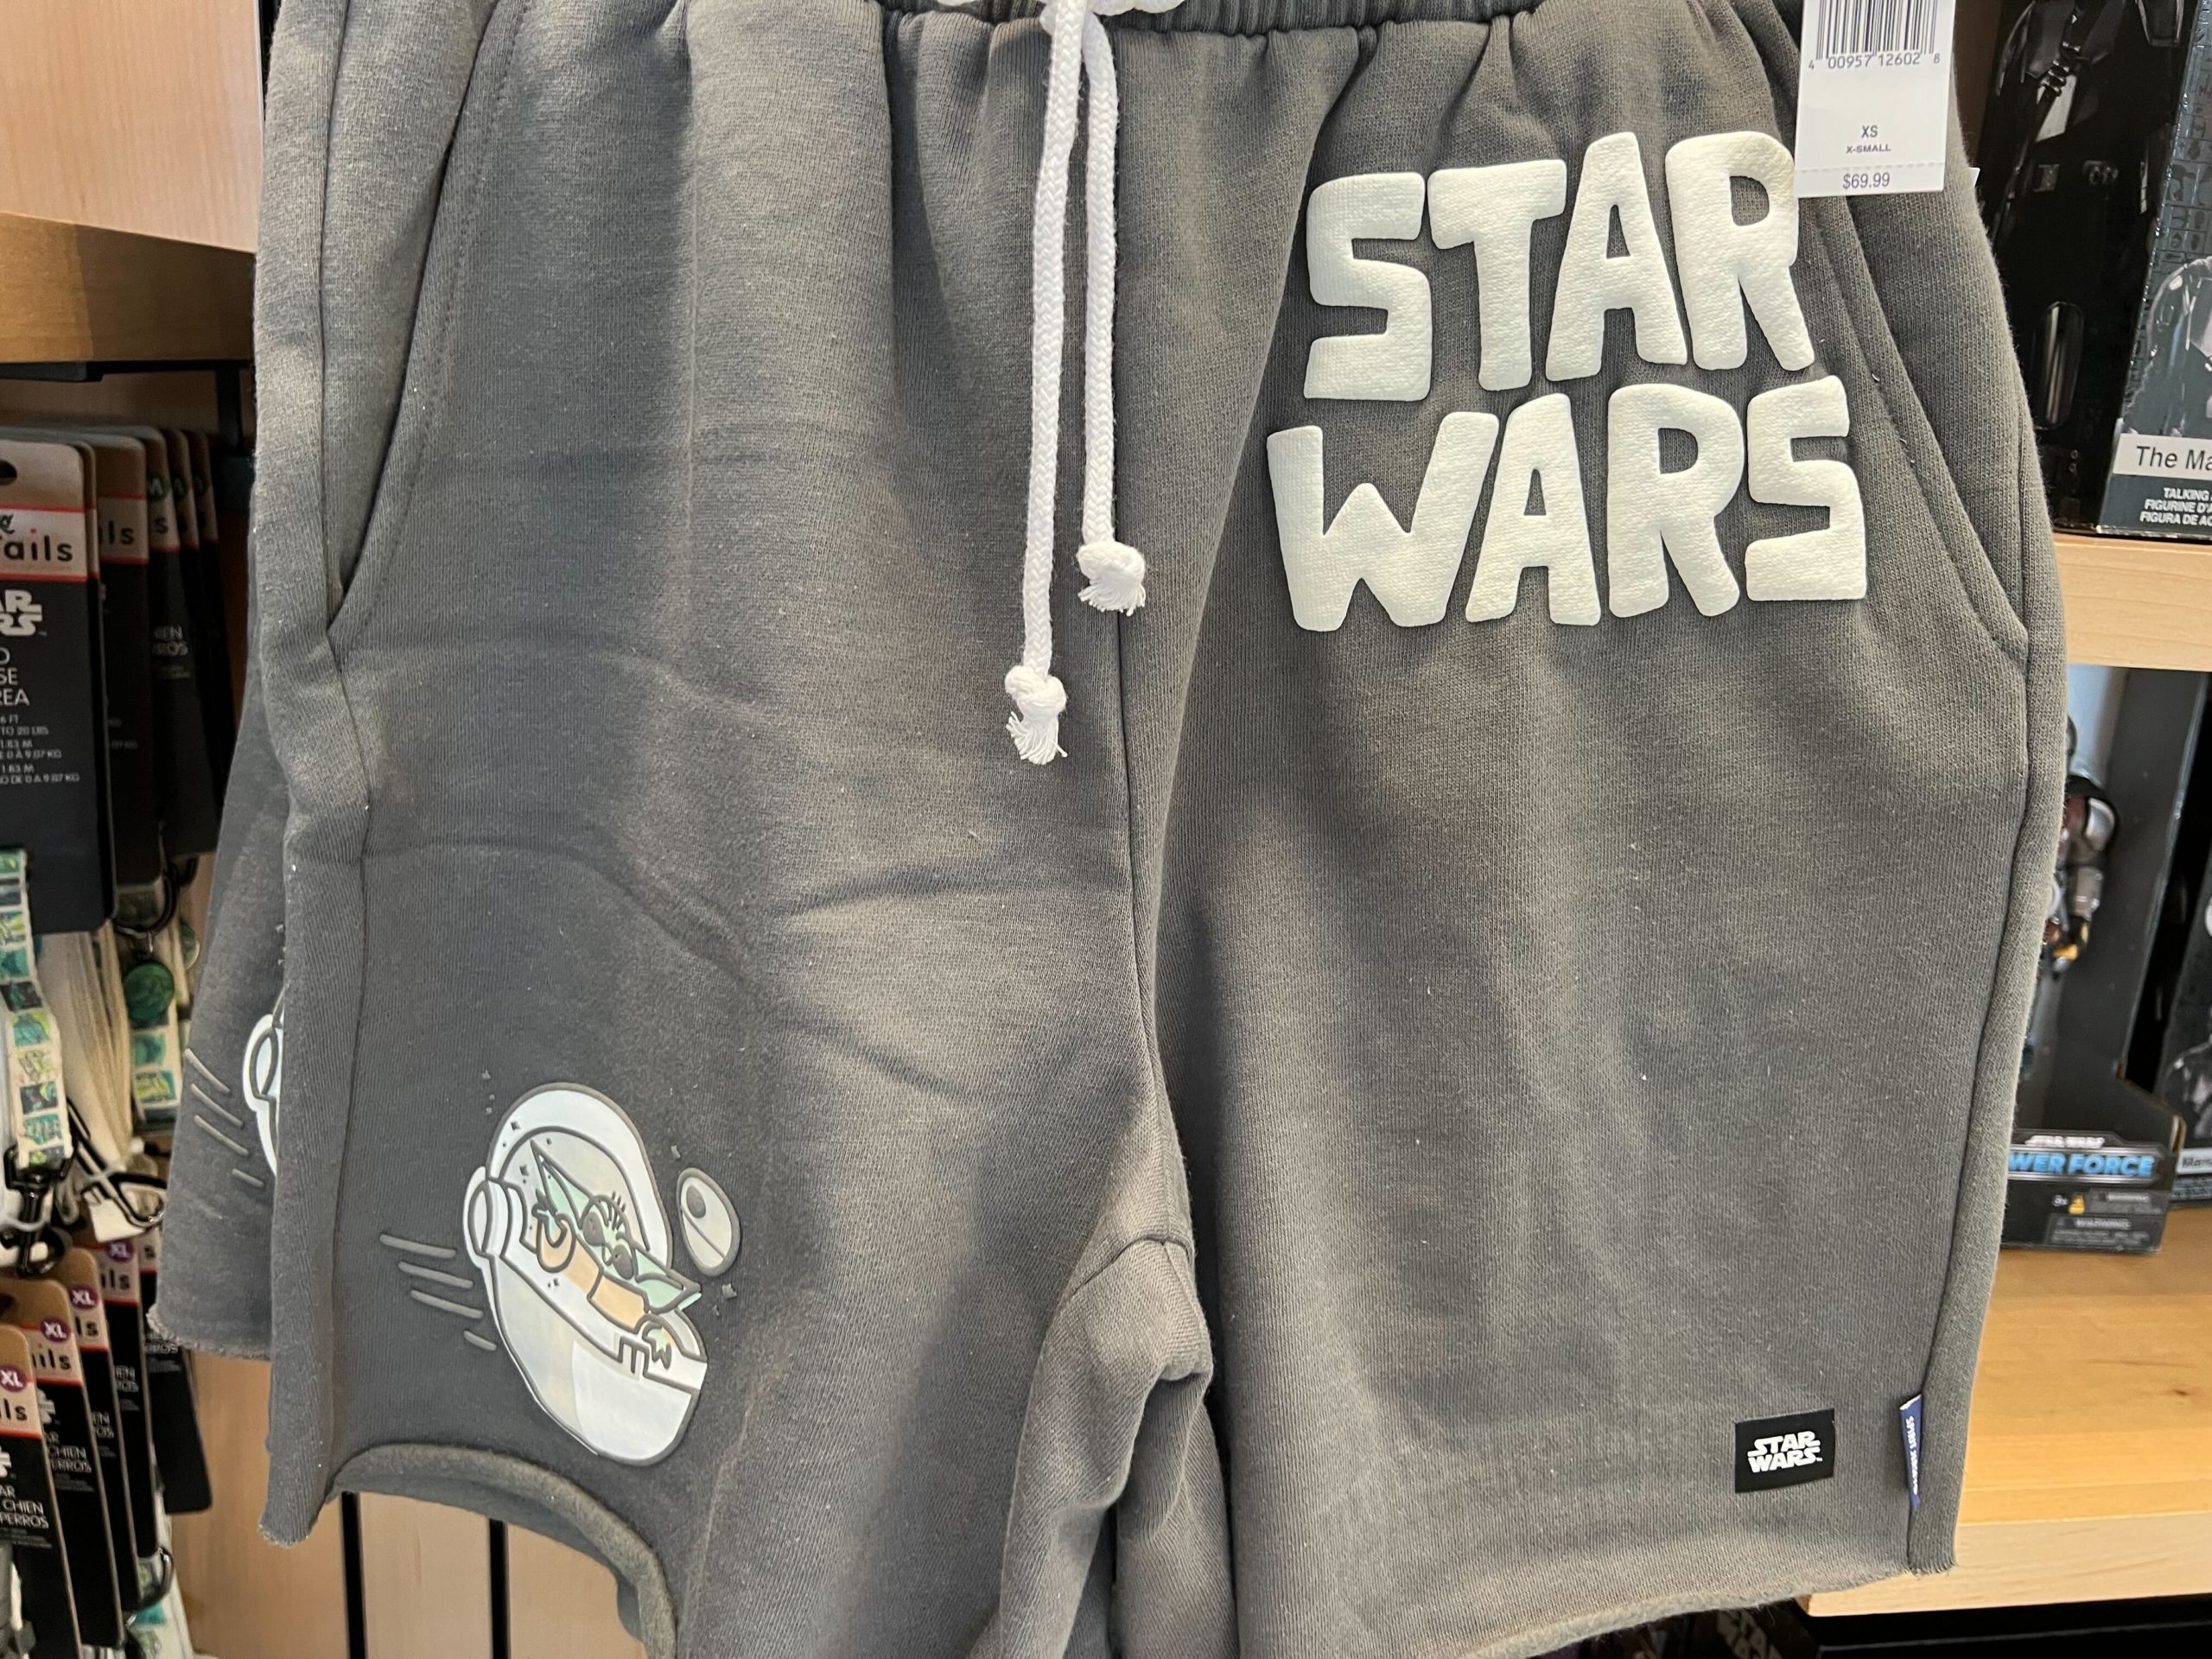 Star Wars Wanted Grogu Spirit Jersey and matching shorts Creations